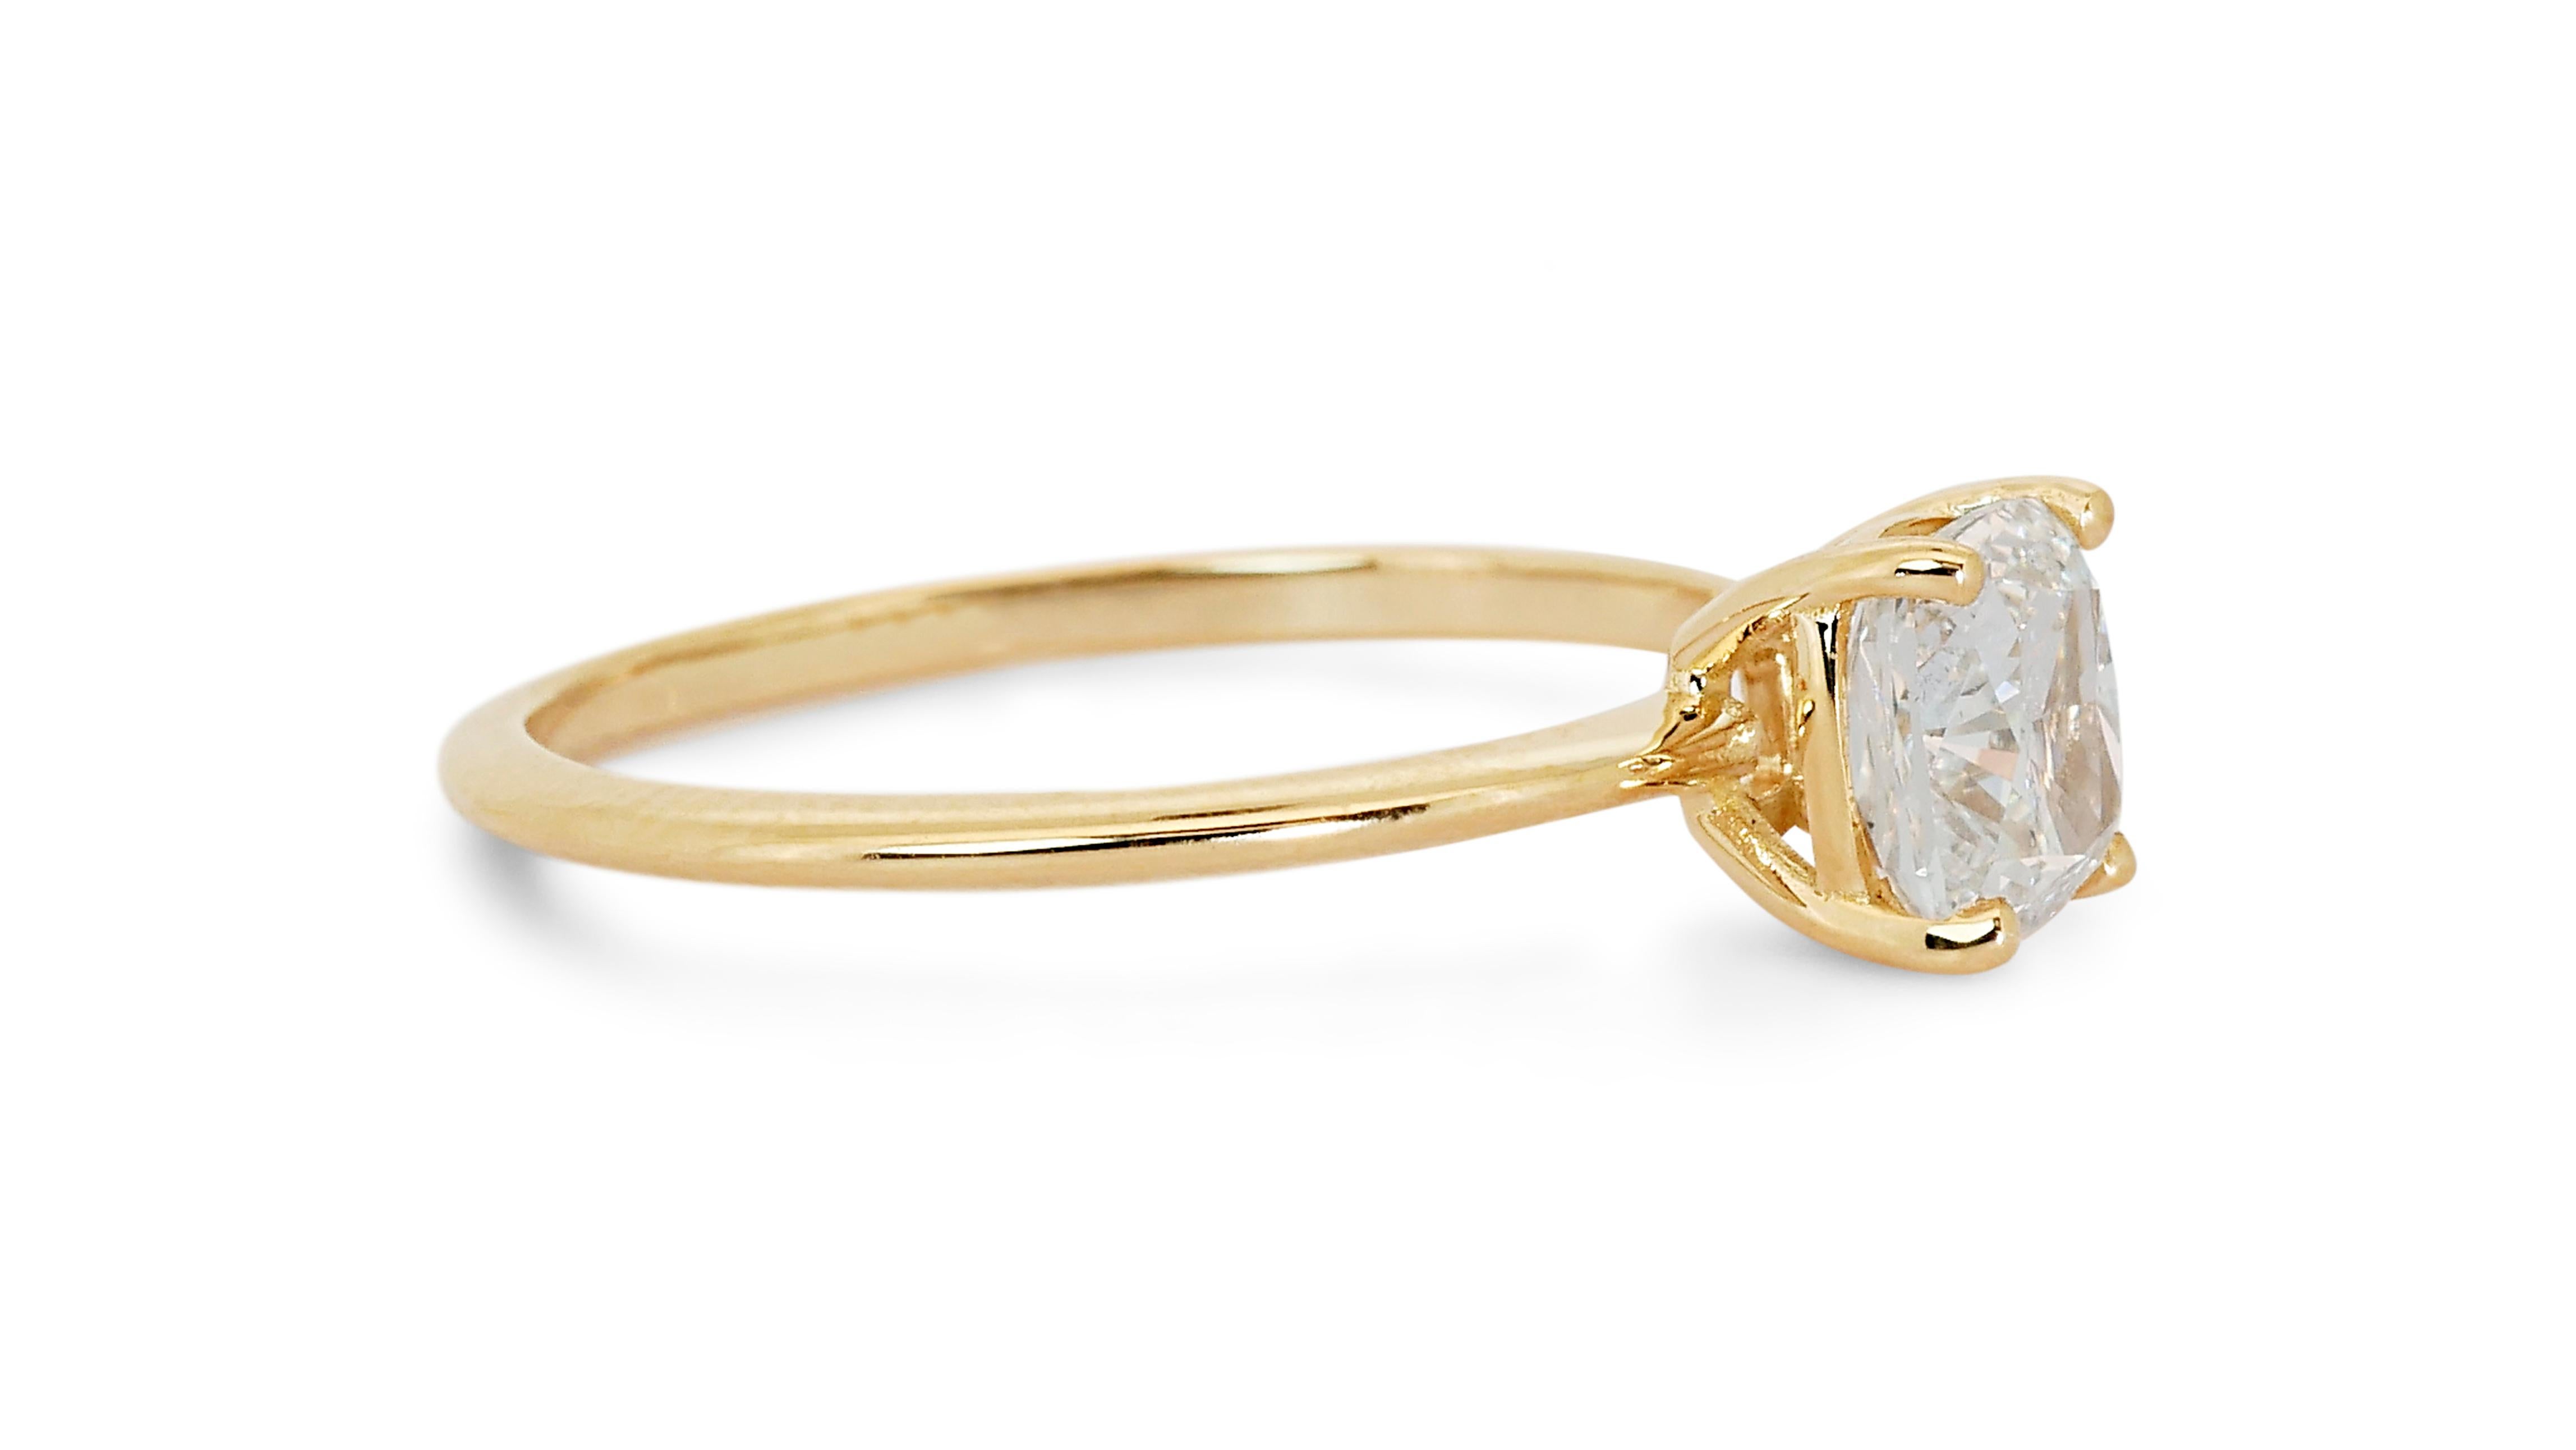 Glamorous 18k Yellow Gold Solitaire Ring w/ 1.02 Carat Natural Diamonds IGI Cert For Sale 1